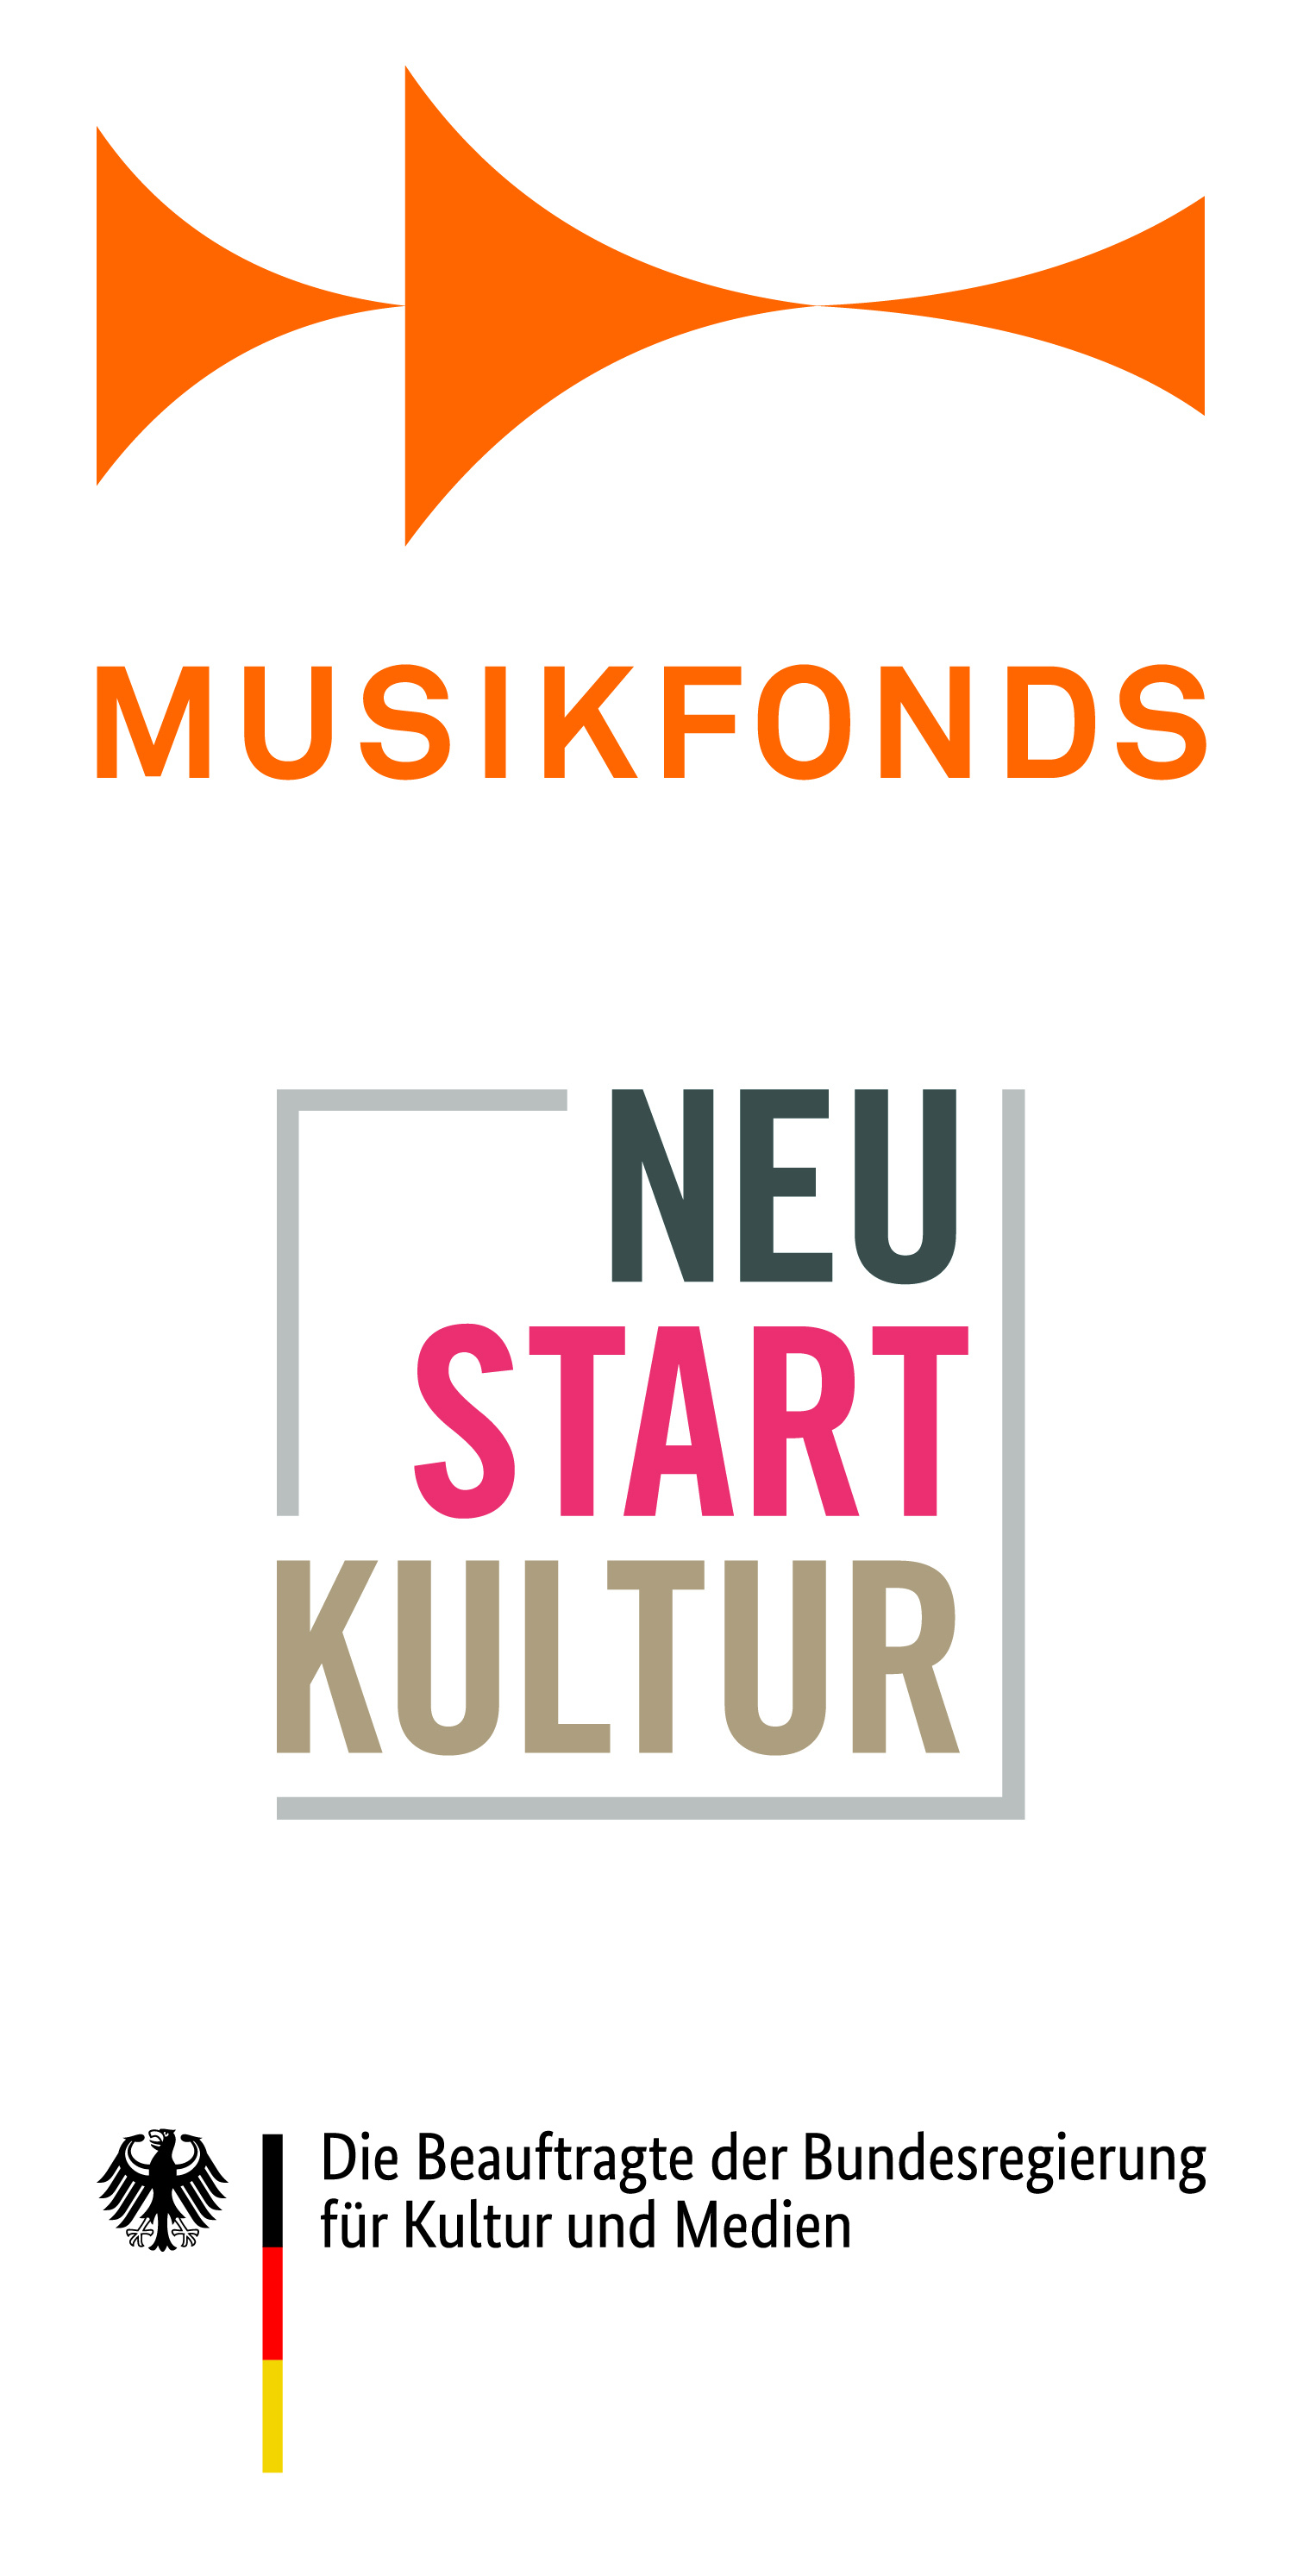 musikfonds_NK_BKM_hoch_cmyk.jpg